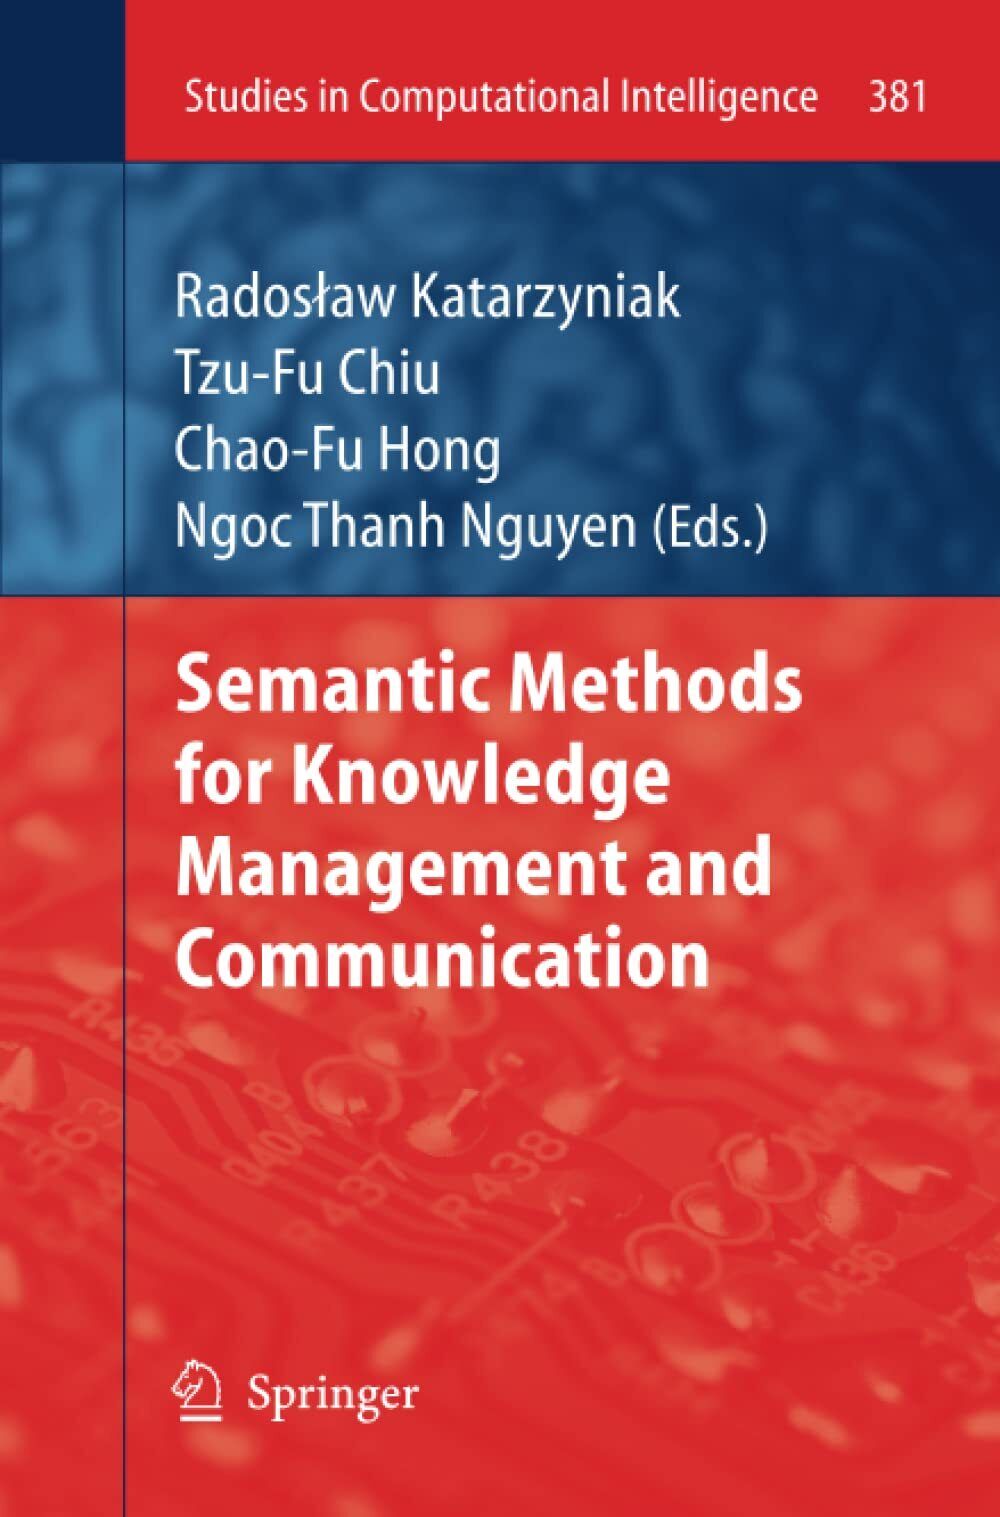 Semantic Methods for Knowledge Management and Communication - Springer, 2013